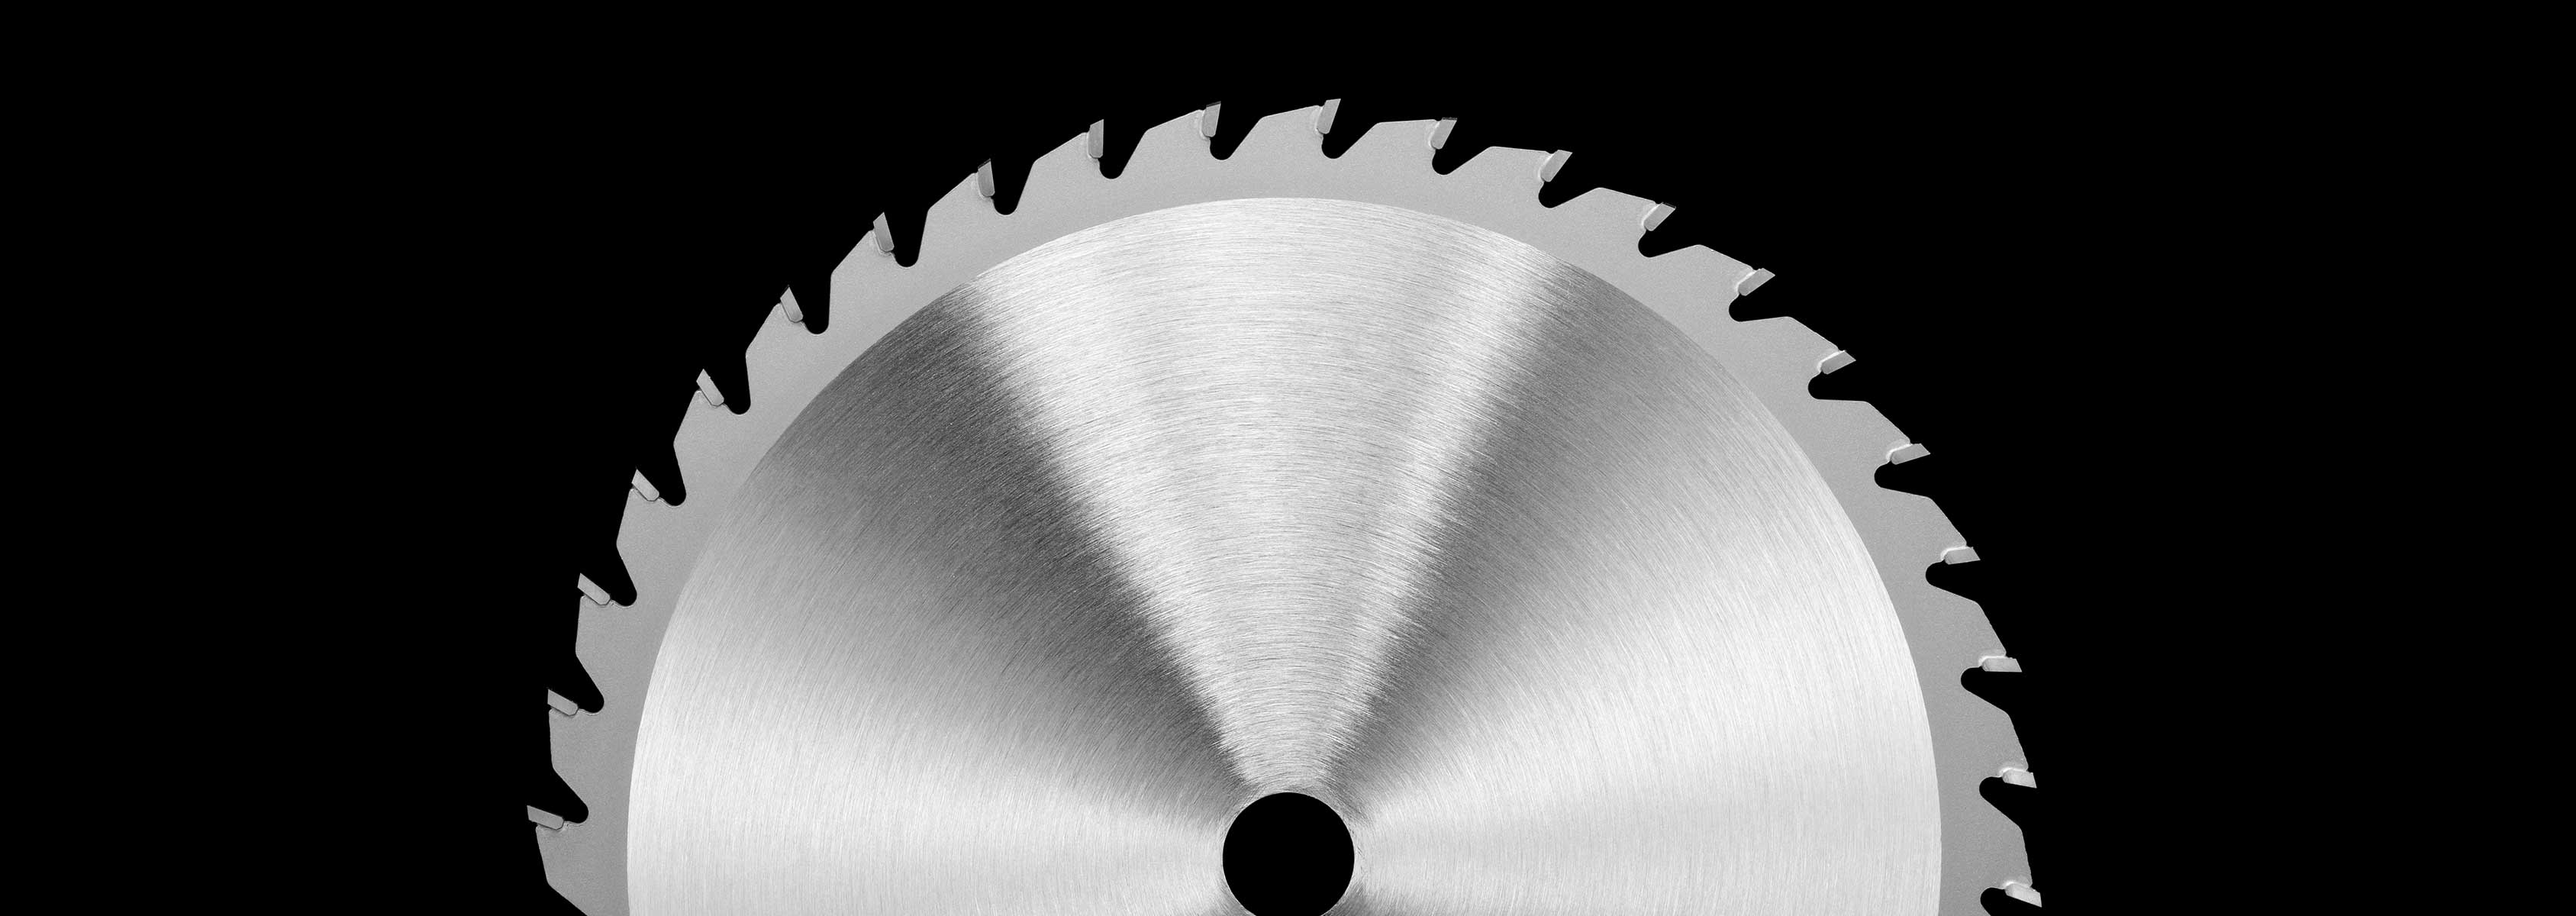 A circular blade on a black background.